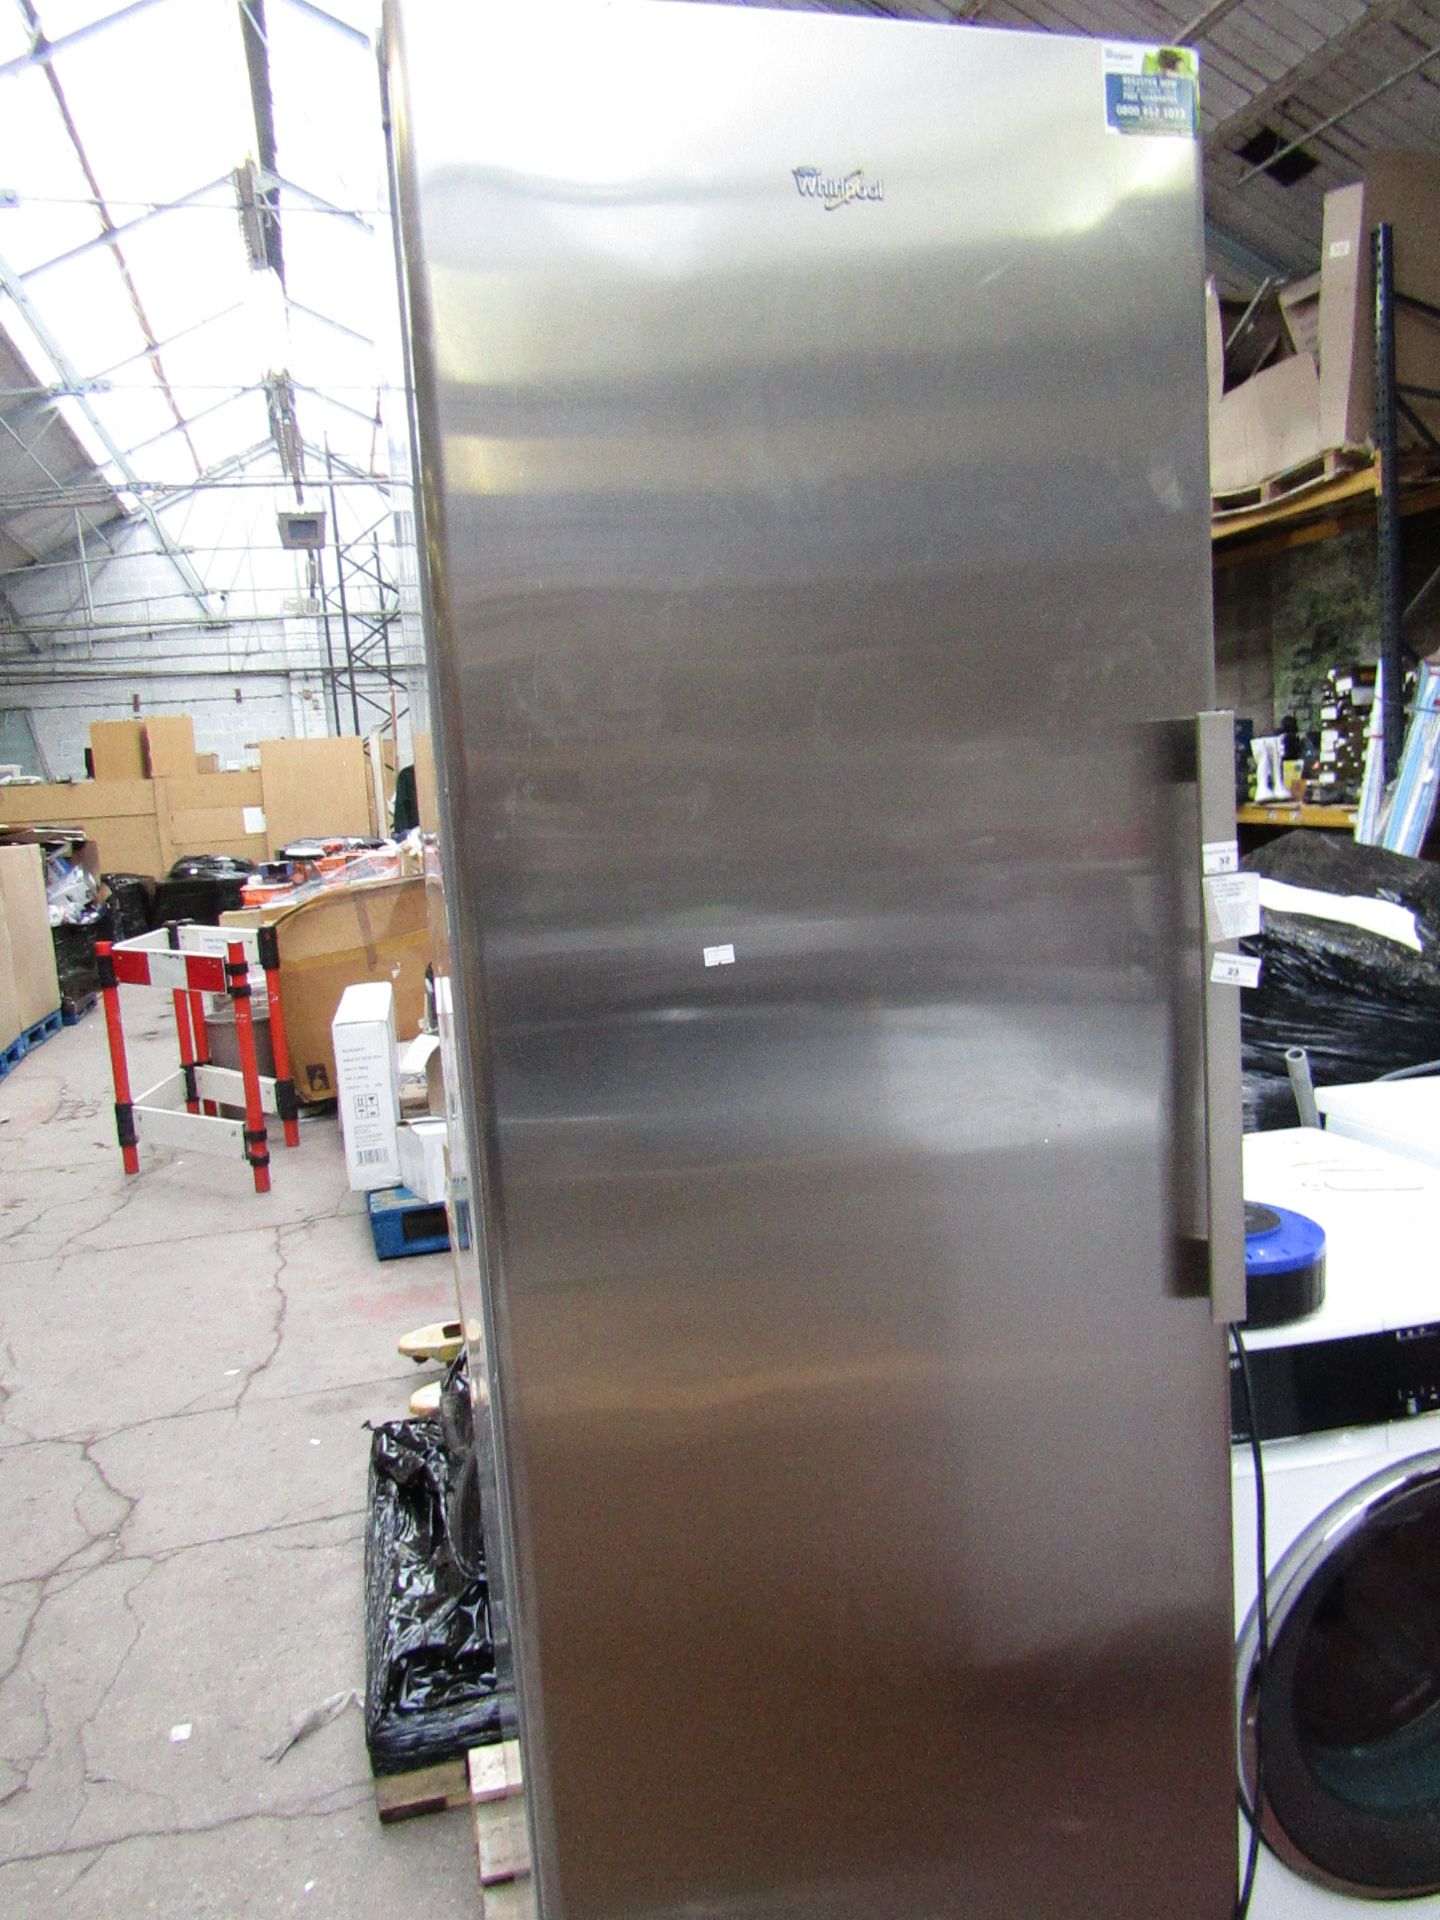 Whirlpool Larder Freezer Freestanding SW81QXRUK.1 Stainless Steel - tested working, needs serious